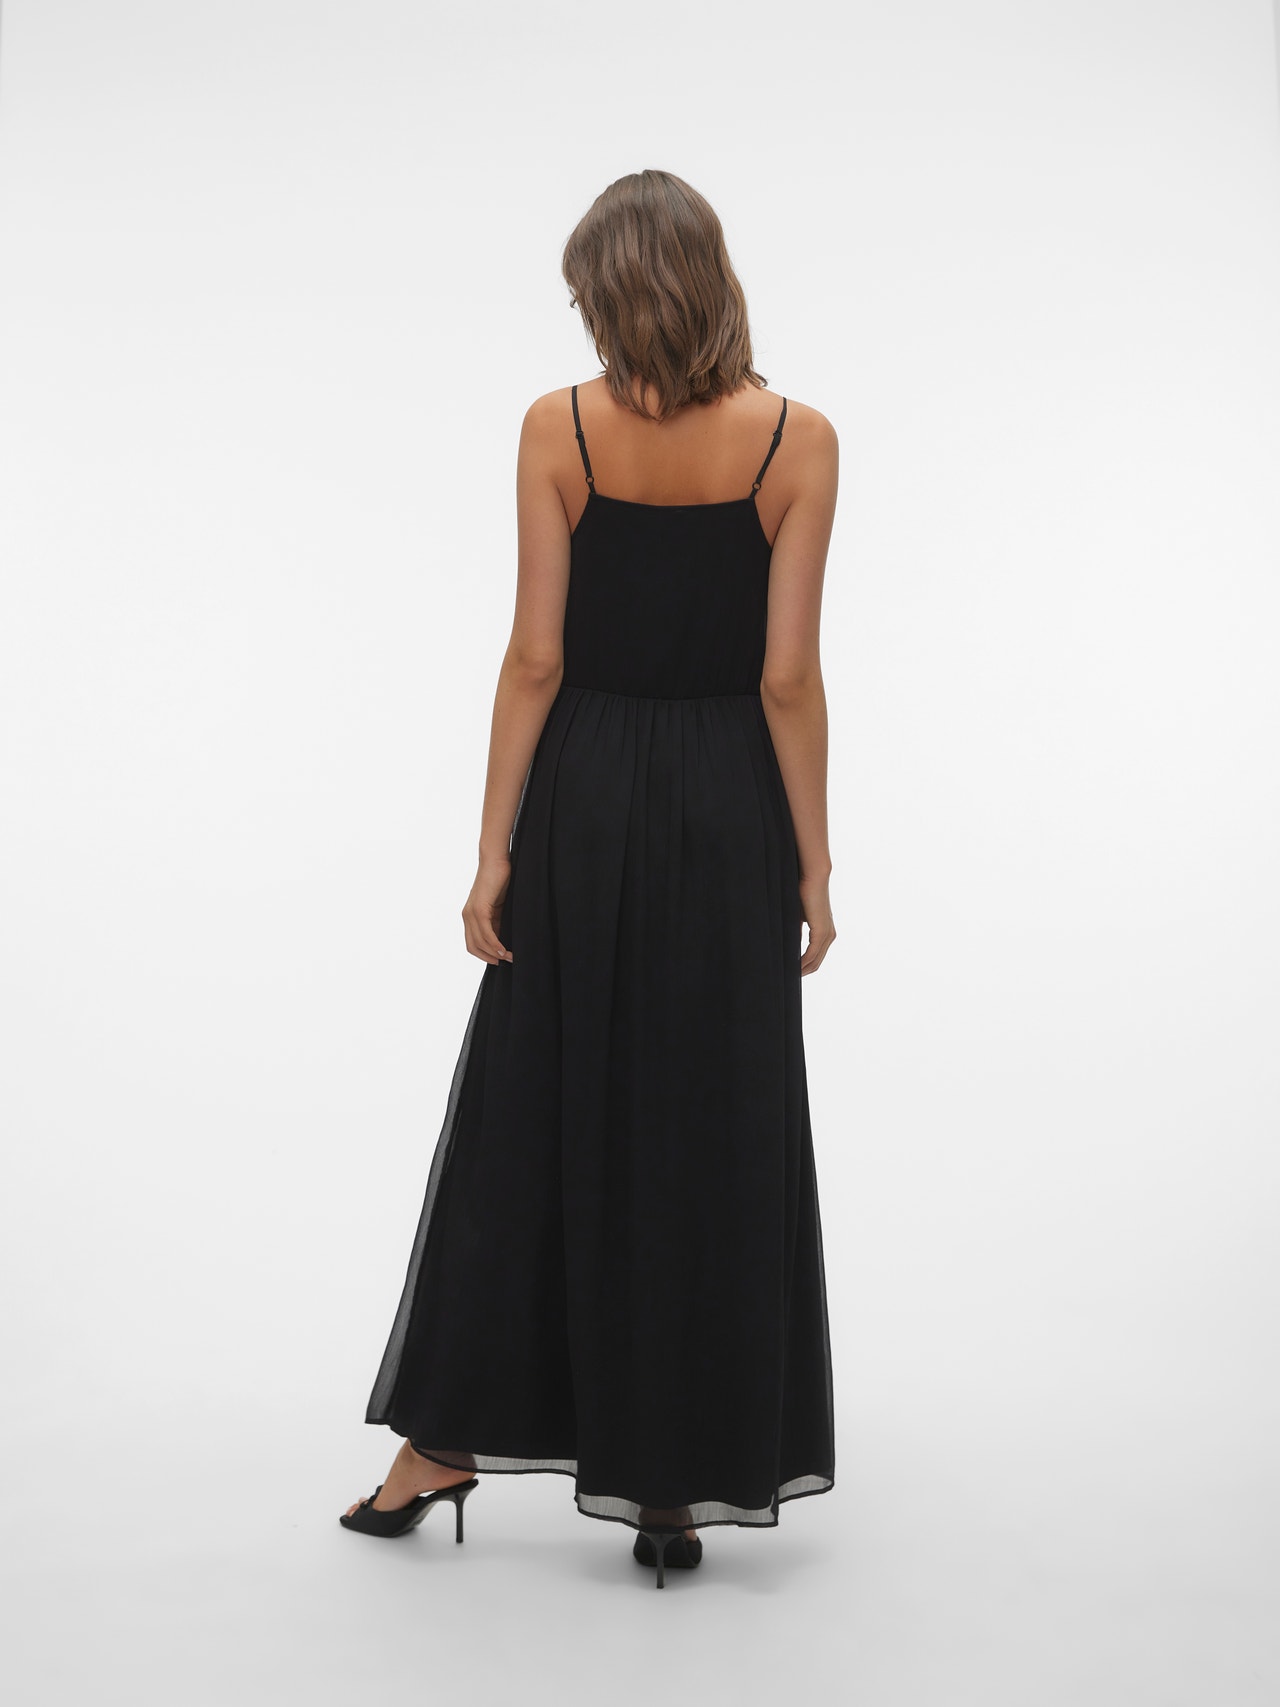 Vero Moda VMOLIVIA Long dress -Black - 10298558